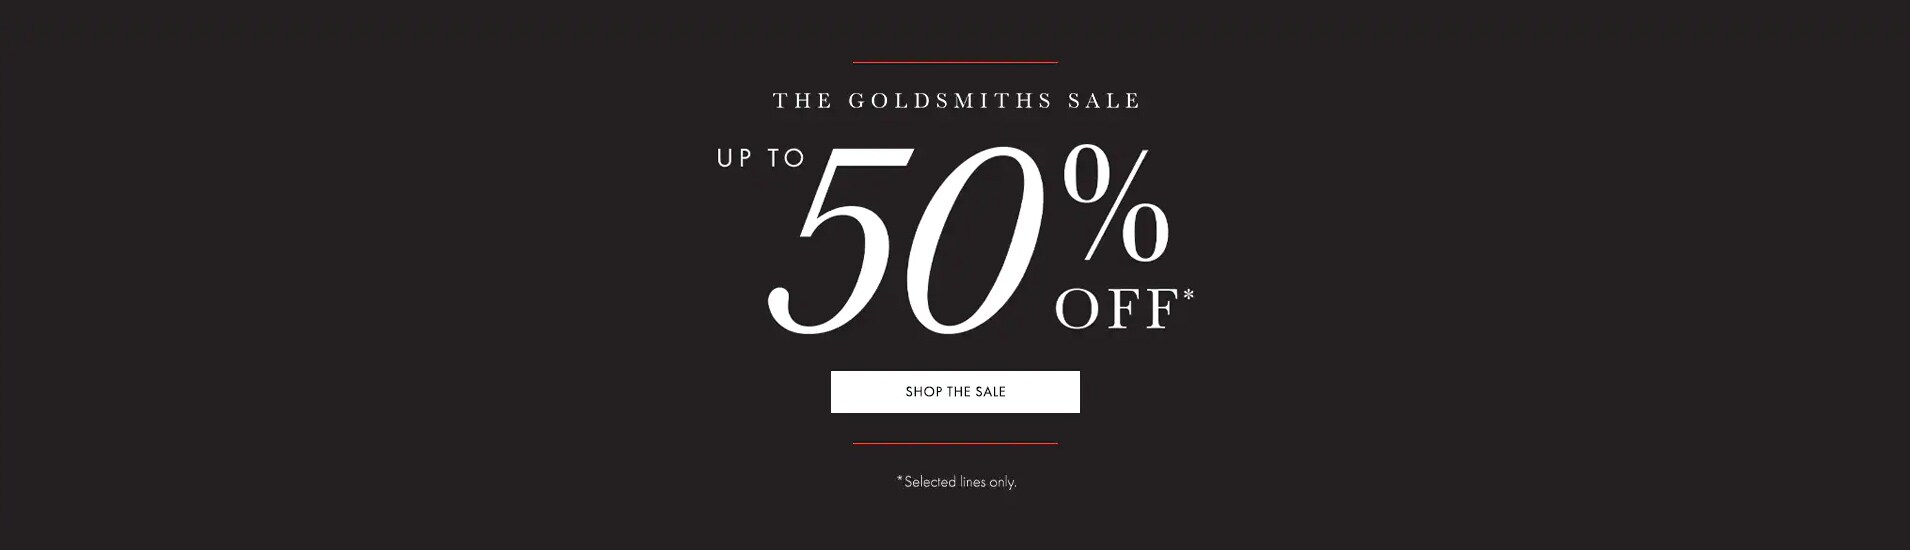 The Goldsmiths Sale